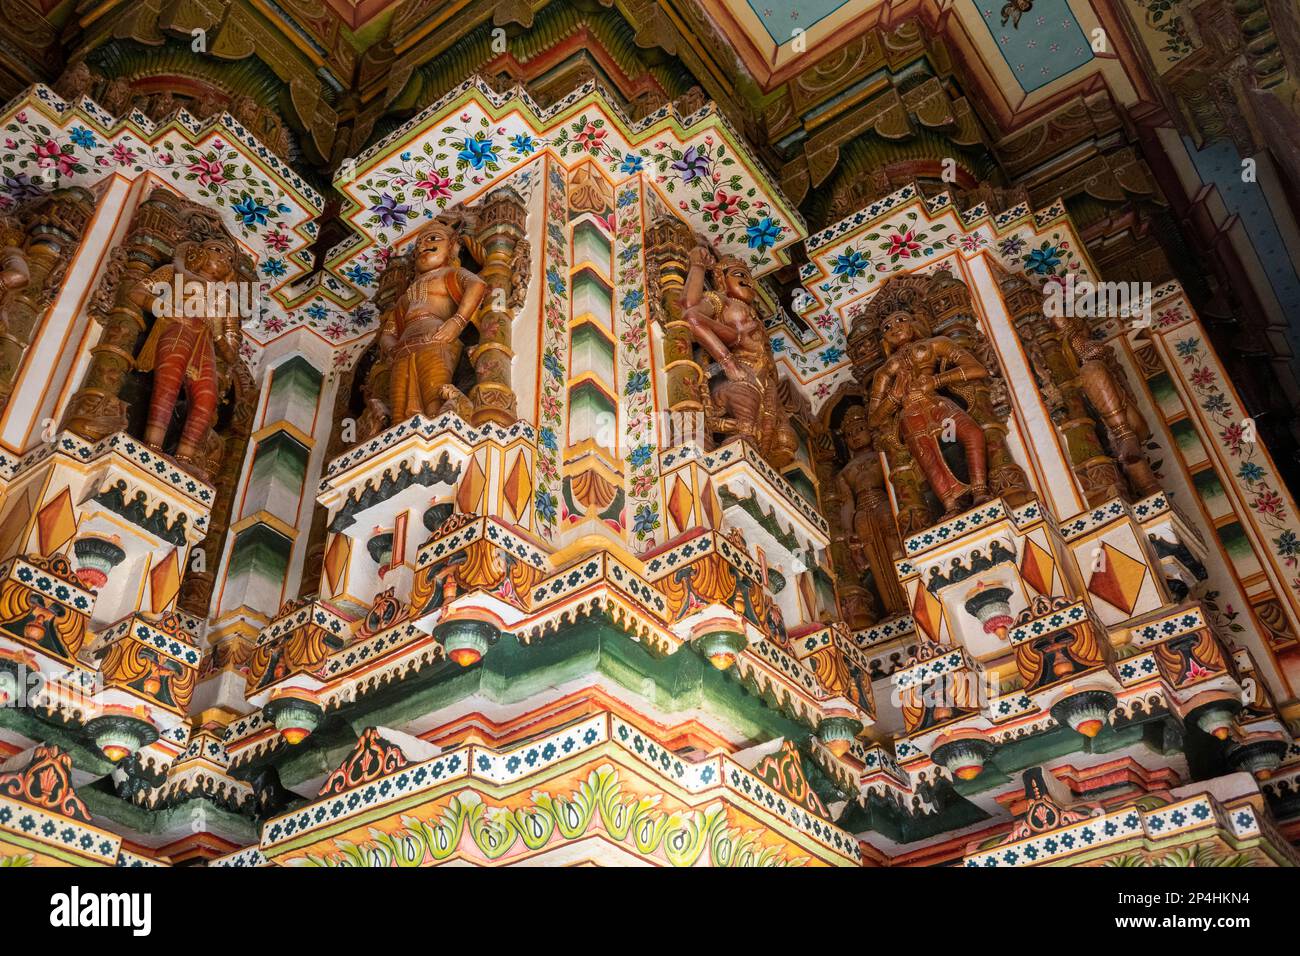 N10851India, Rajasthan, Bikaner, Seth Bhandasar, (Bhanda Shah Mandir) Jain temple interior, painted figures decorating columns Stock Photo